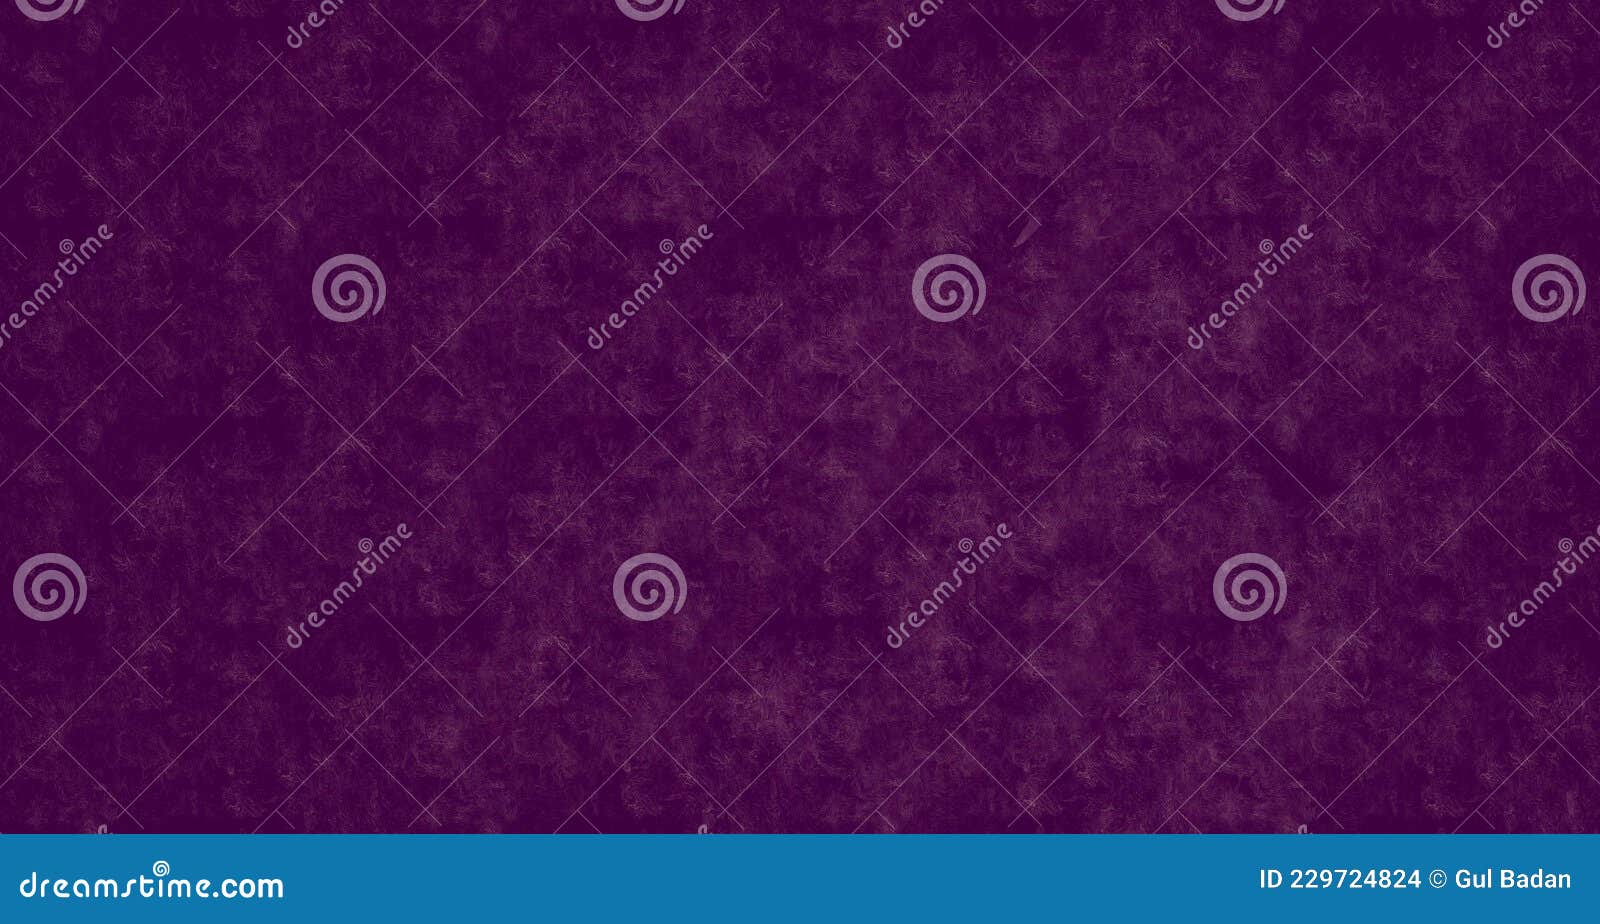 Premium Vector | Beautiful dark purple gradient wallpaper or background